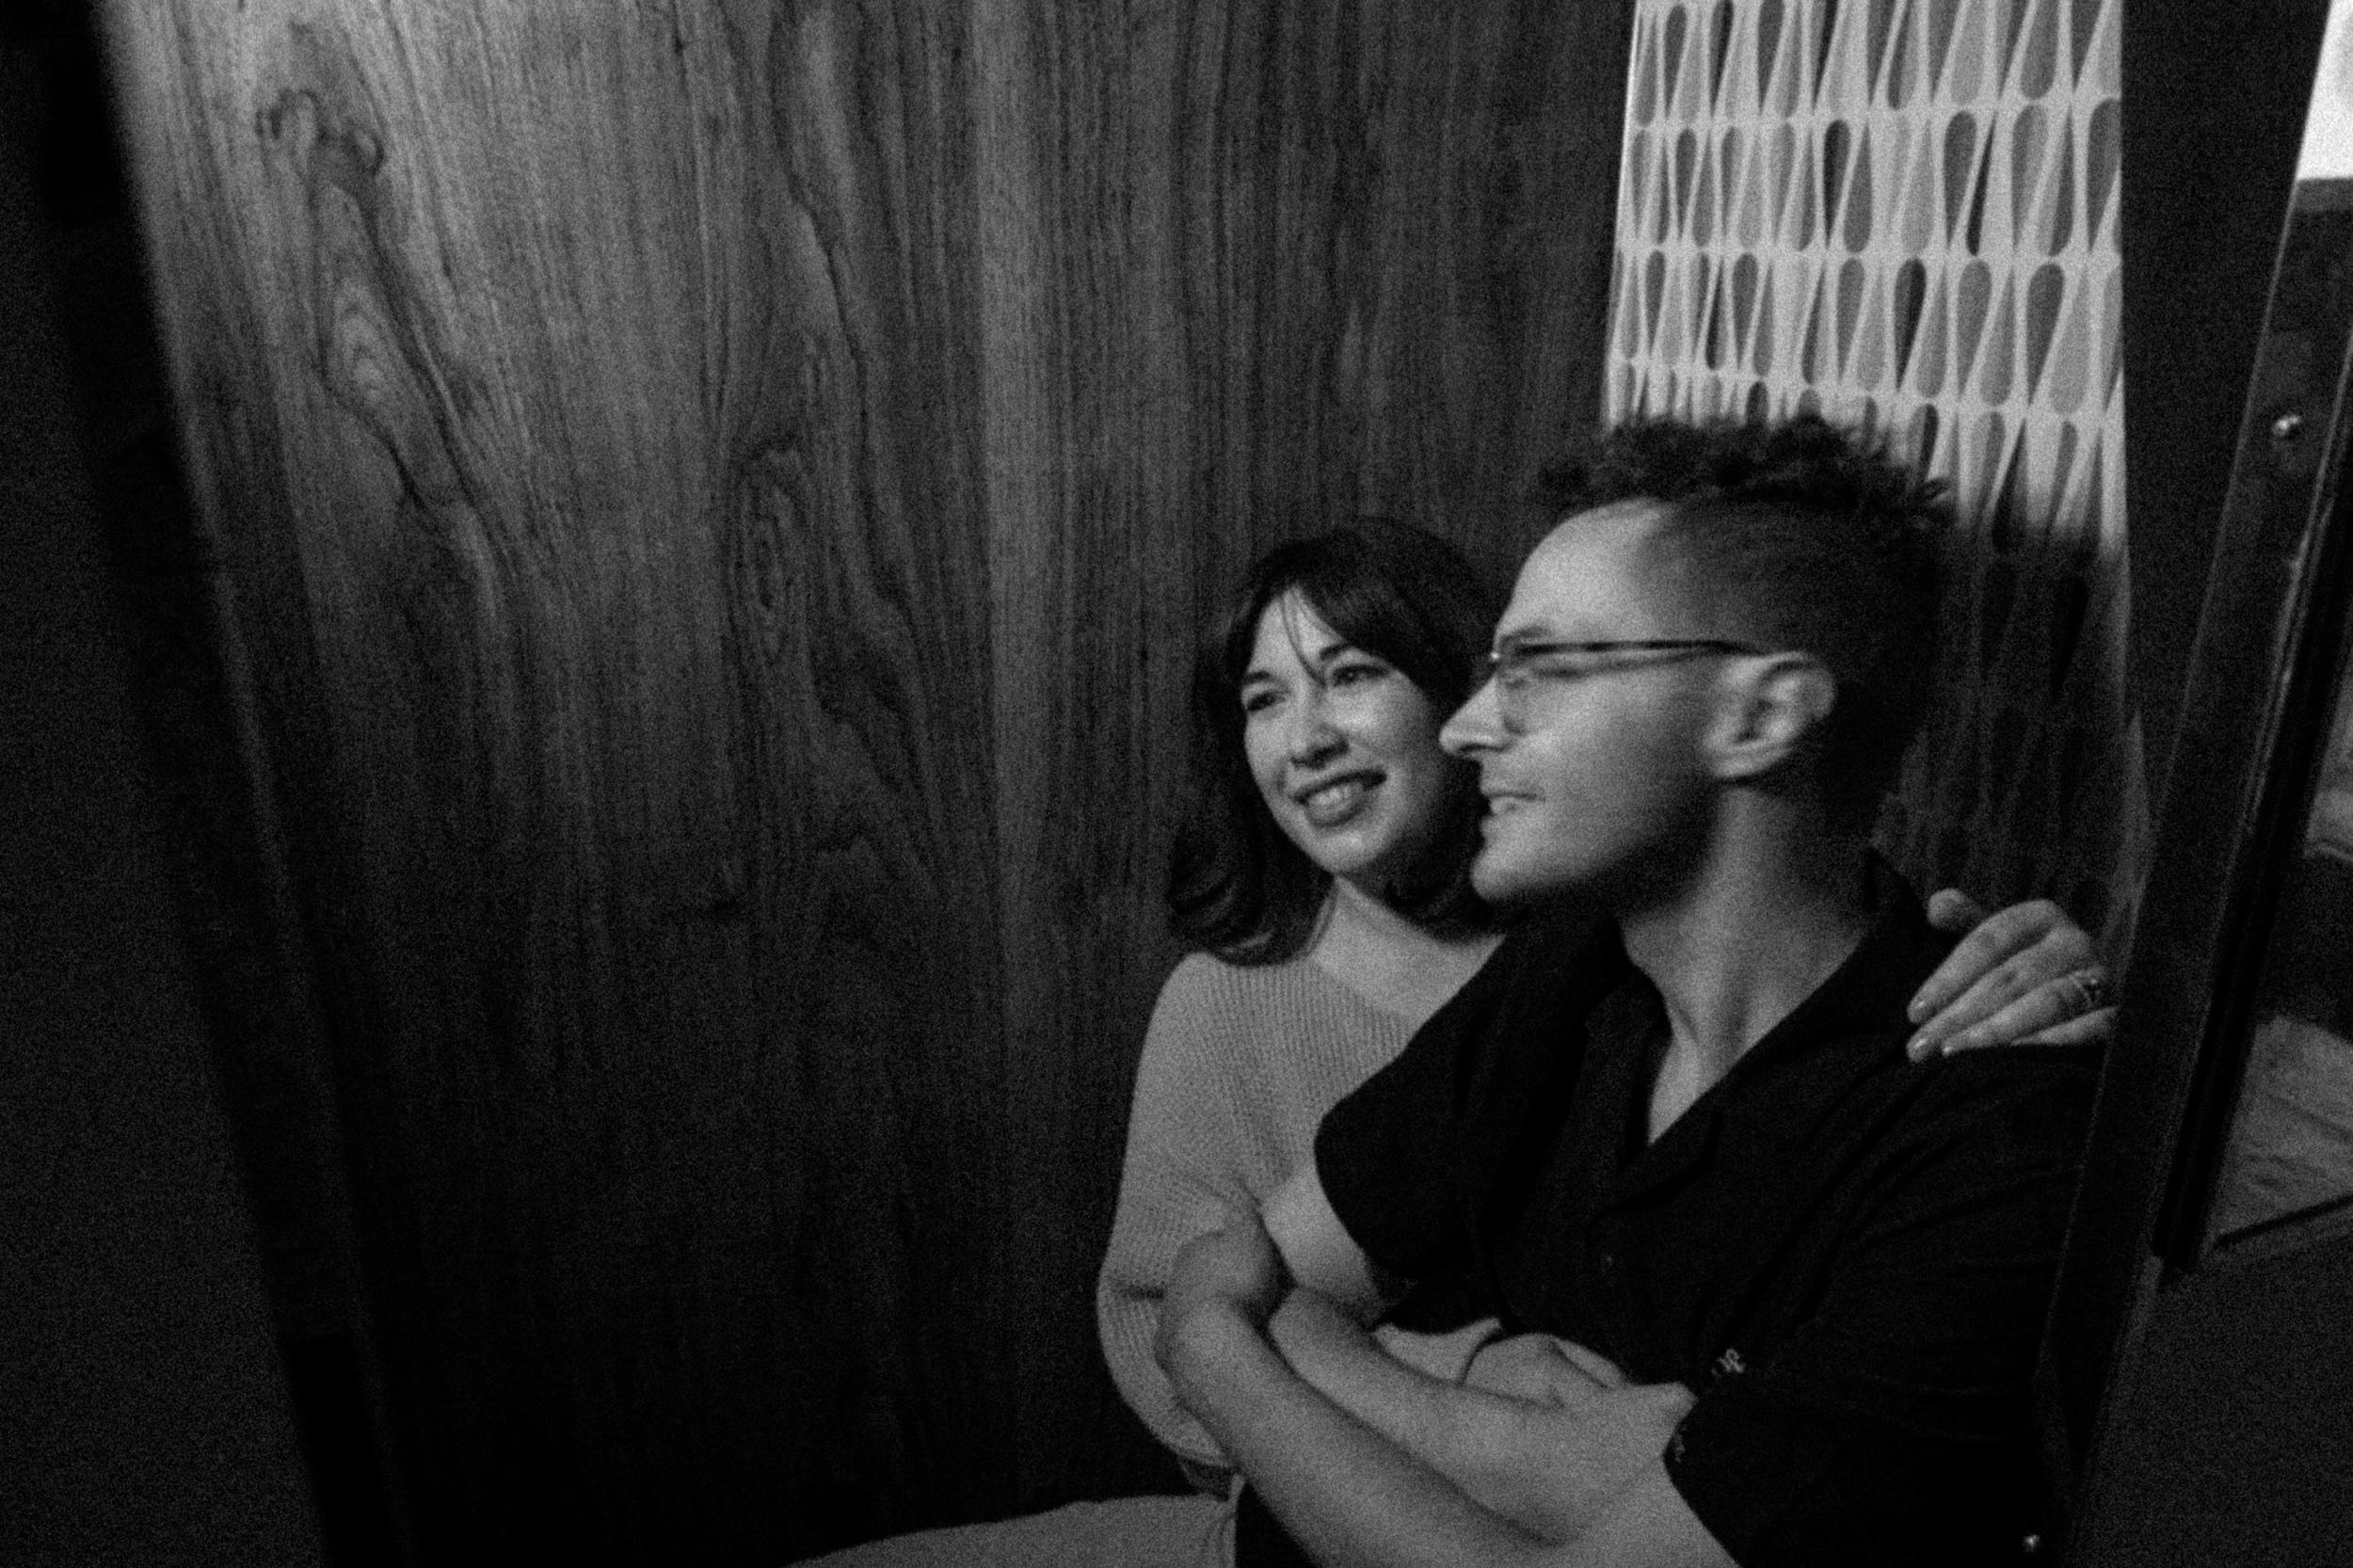 A fun downtown Denver engagement session at a bar. Sputnik, Denver bar engagement photos. Colorado engagement photos by Ashley Joyce Photography